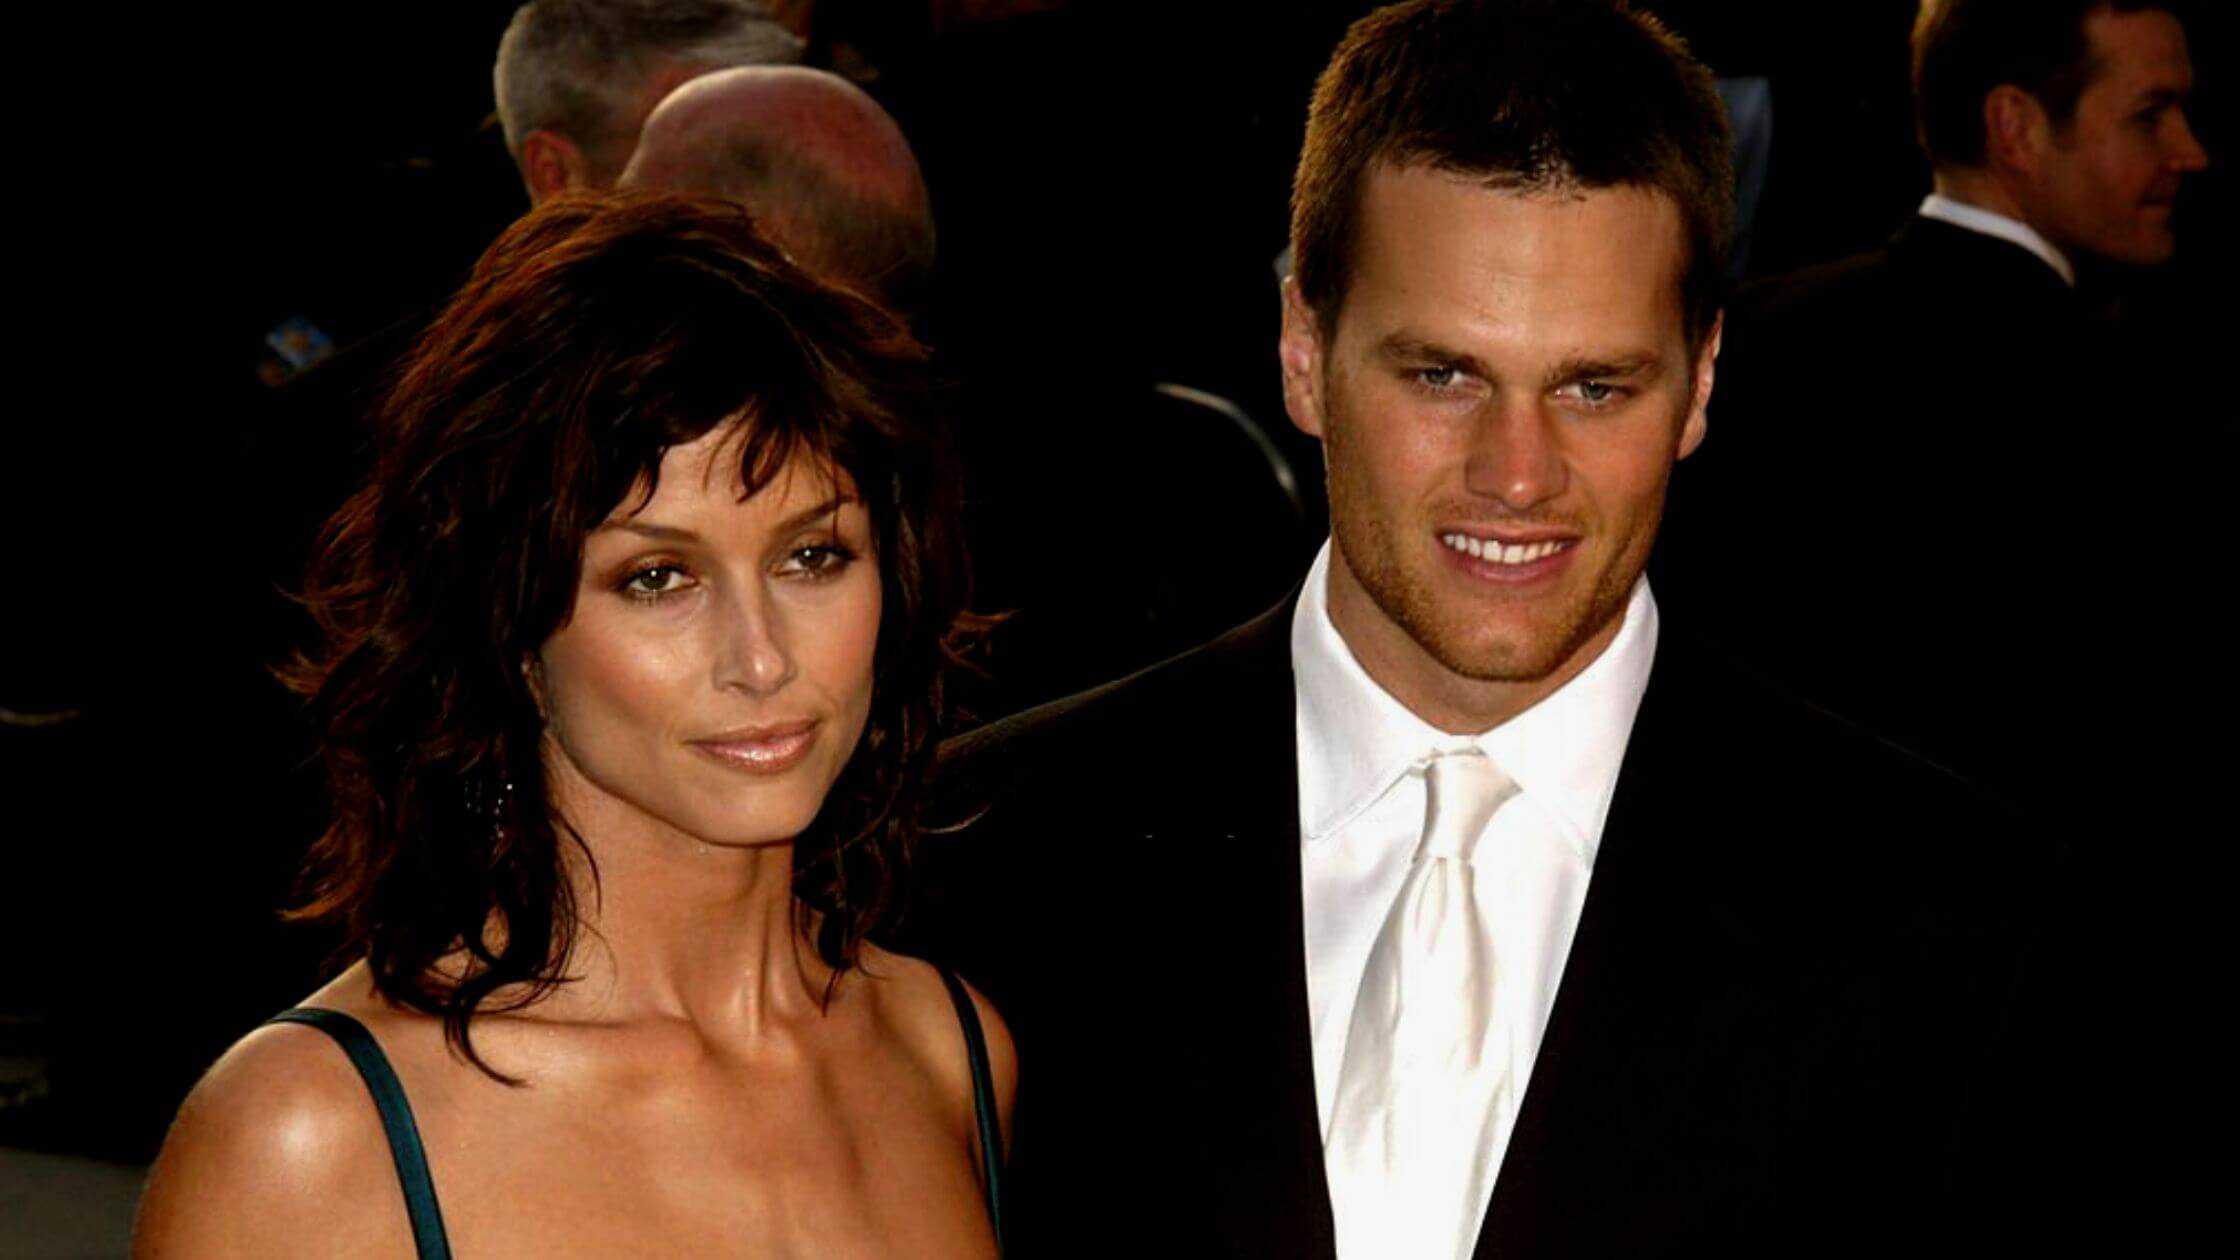 Bridget Moynahan Posts About Breakup Despite Divorce Rumors Regarding Her Ex Tom Brady